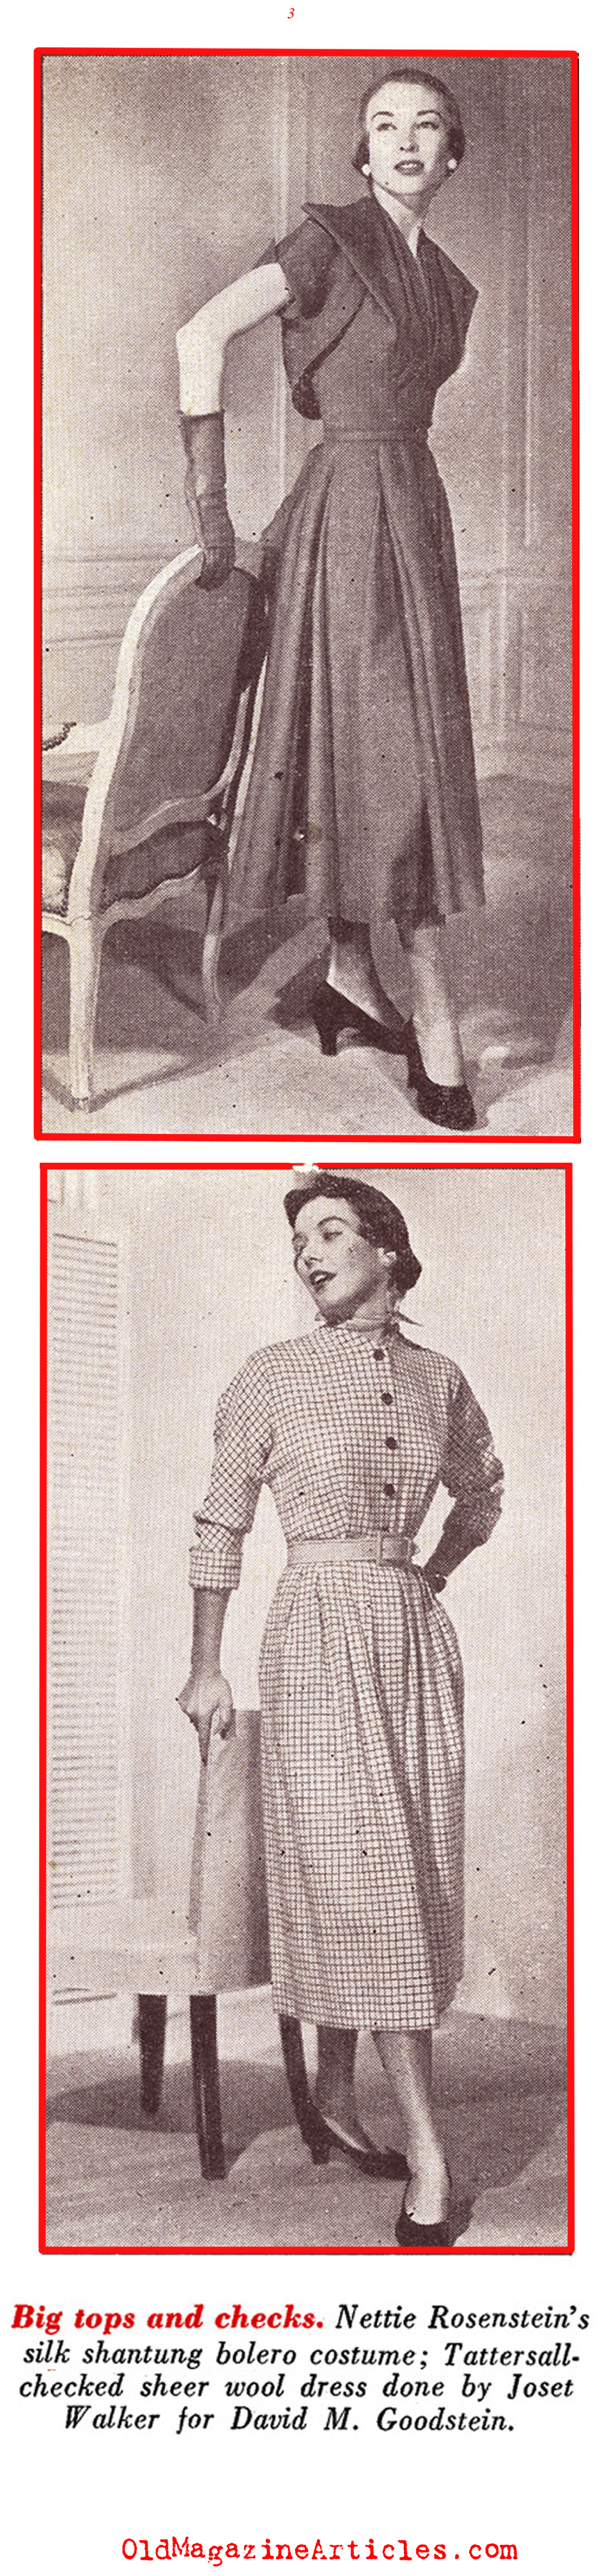 The Mid-Century Look in Fashion (Pathfinder Magazine, 1950)